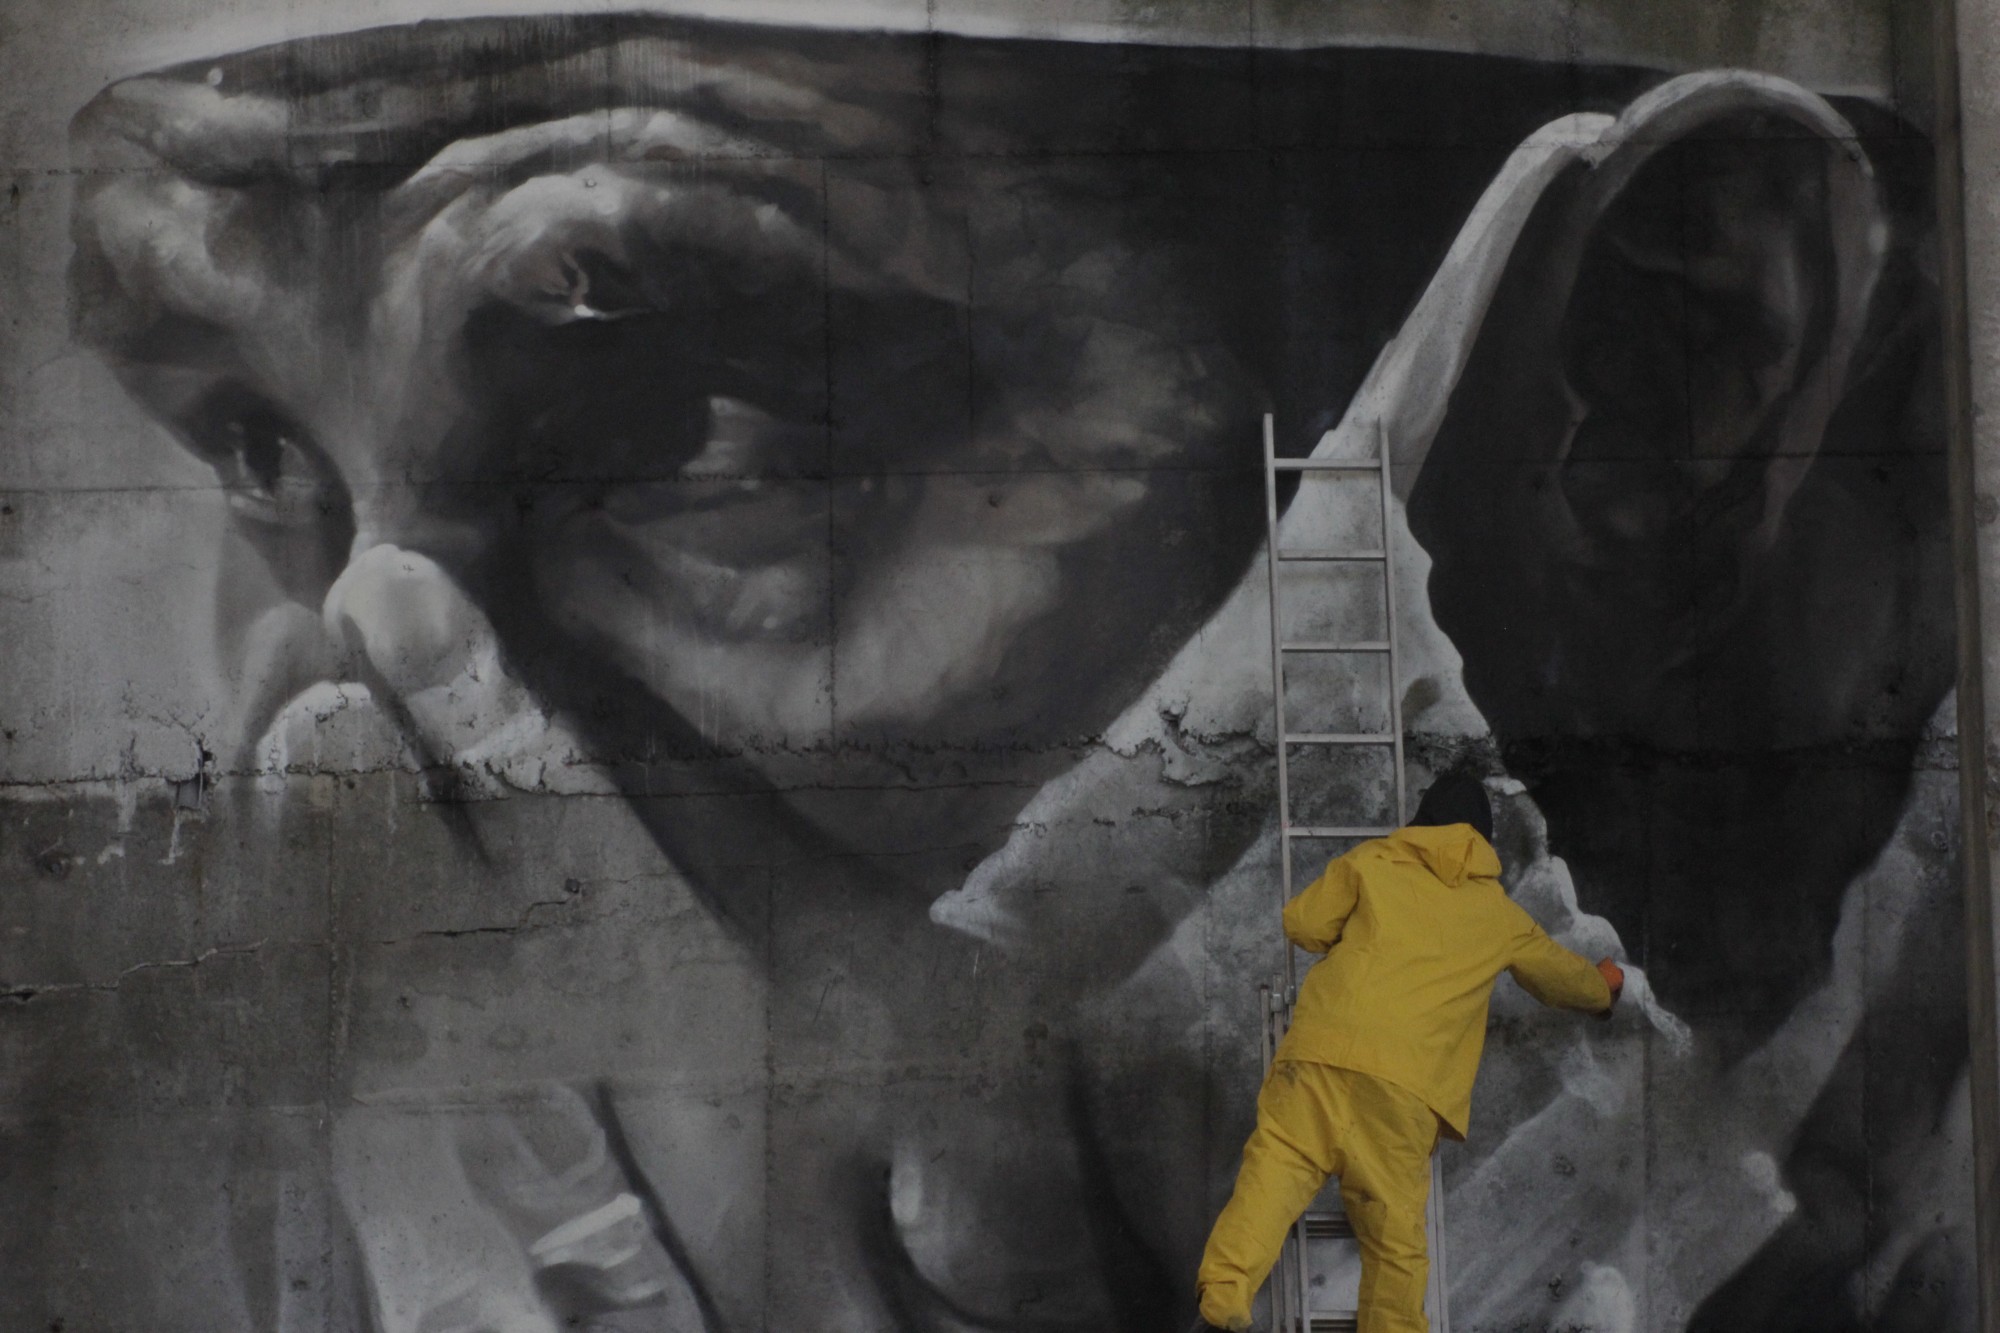 guildo van helten street art chernobyl 30 reactor photo Geo Leros artunitedus 6 e1462829970493